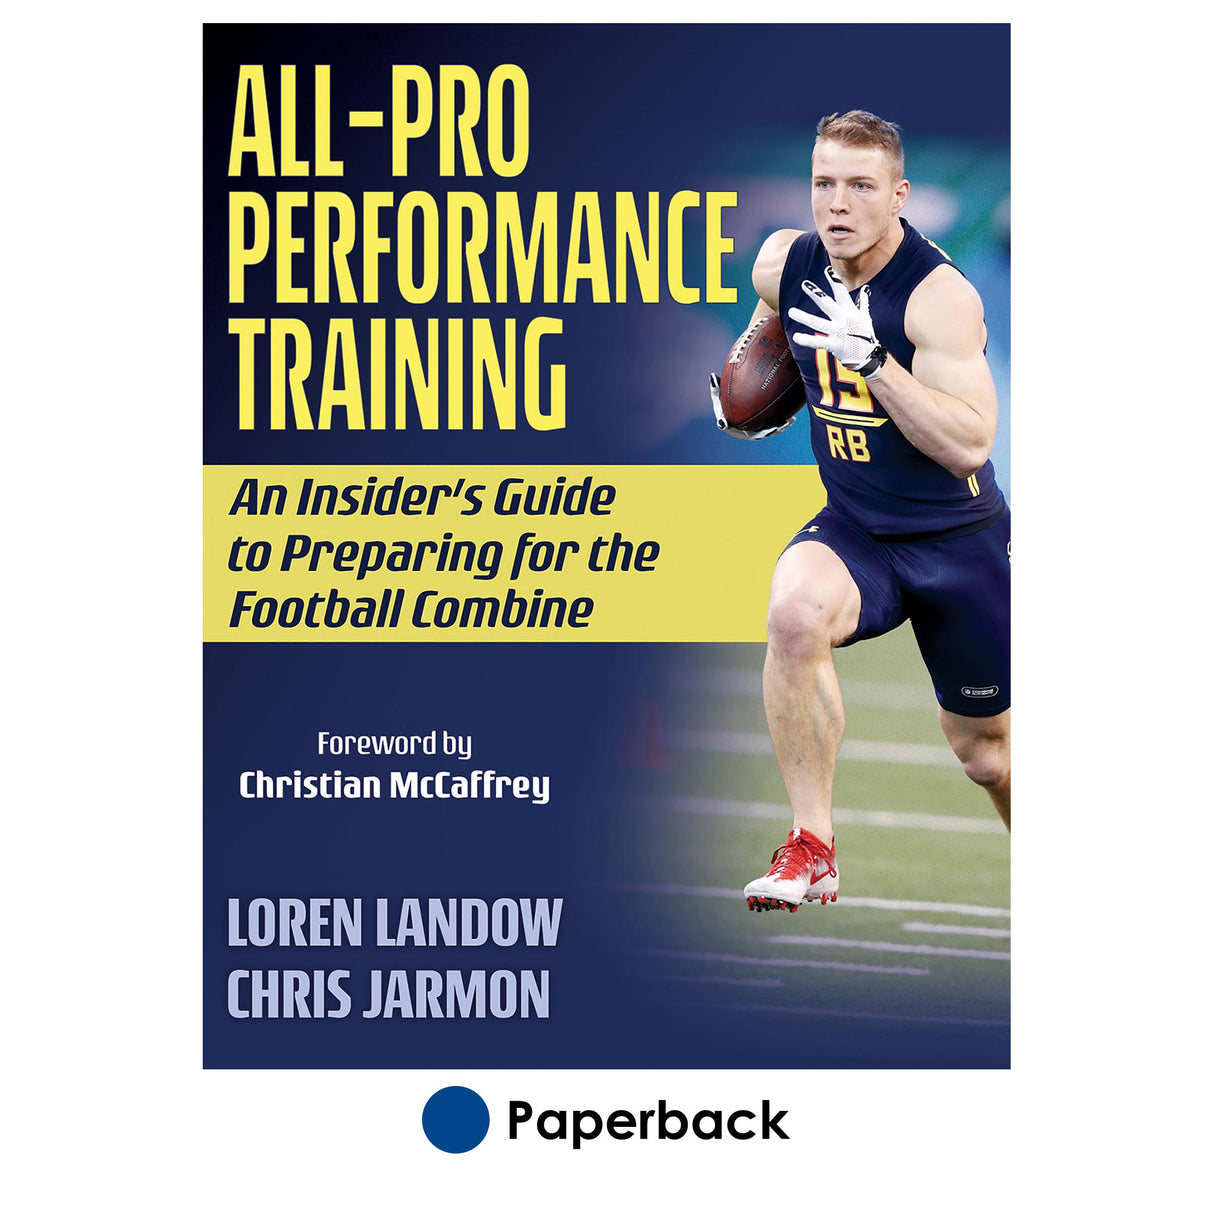 All-Pro Performance Training